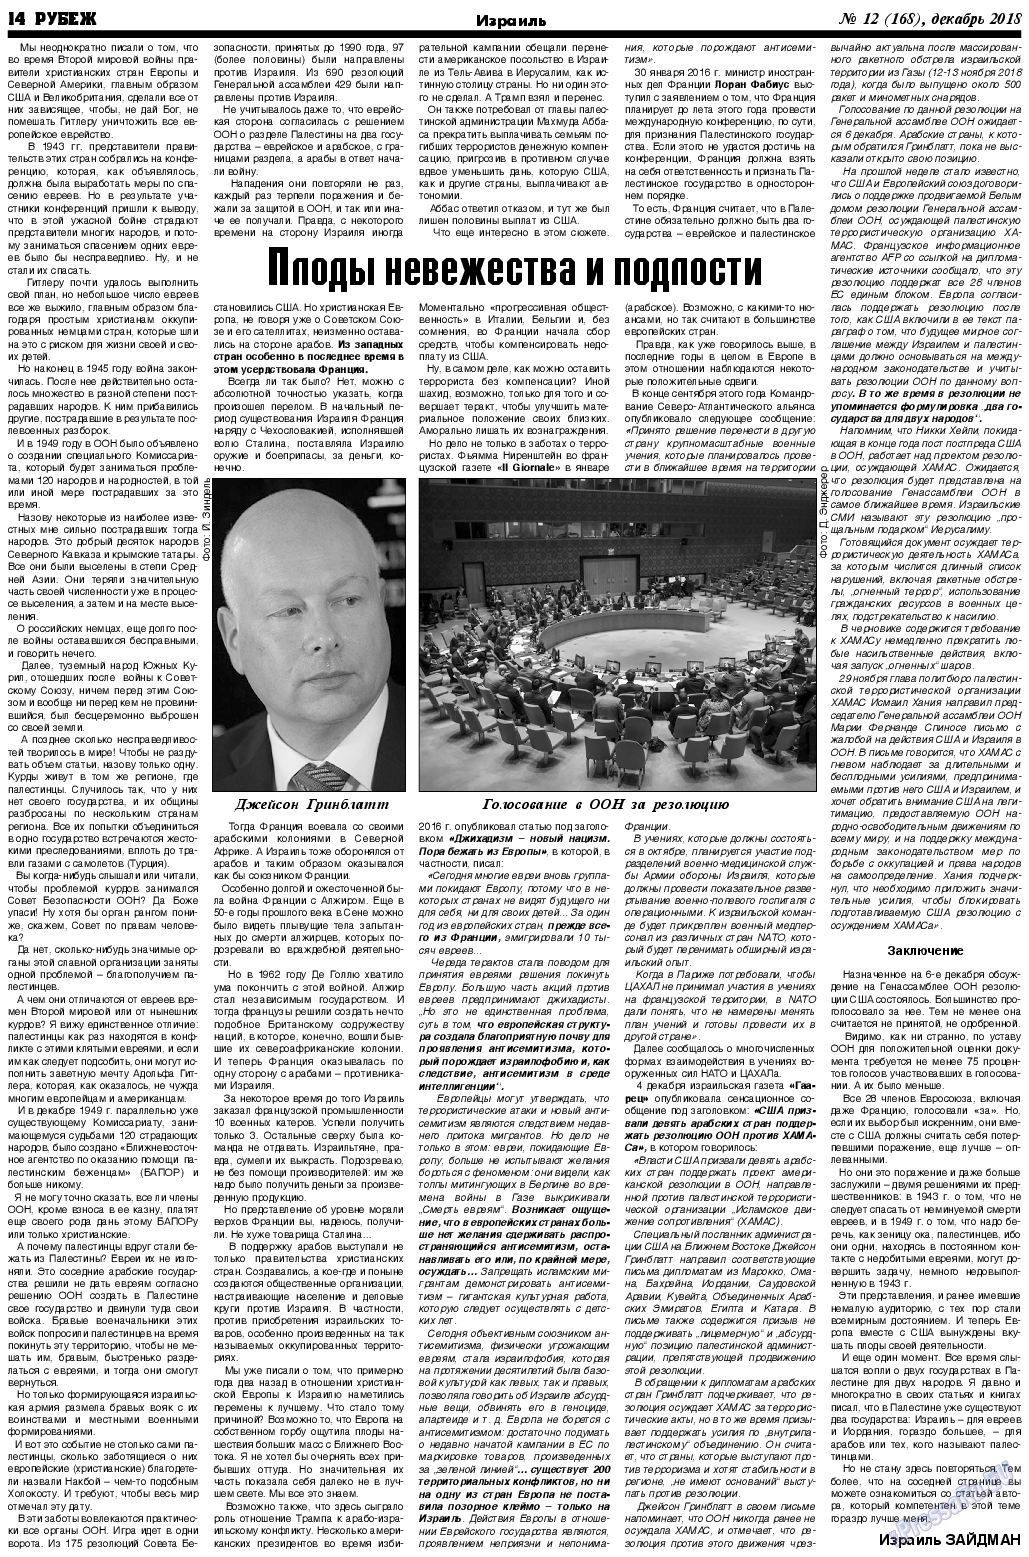 Рубеж, газета. 2018 №12 стр.14